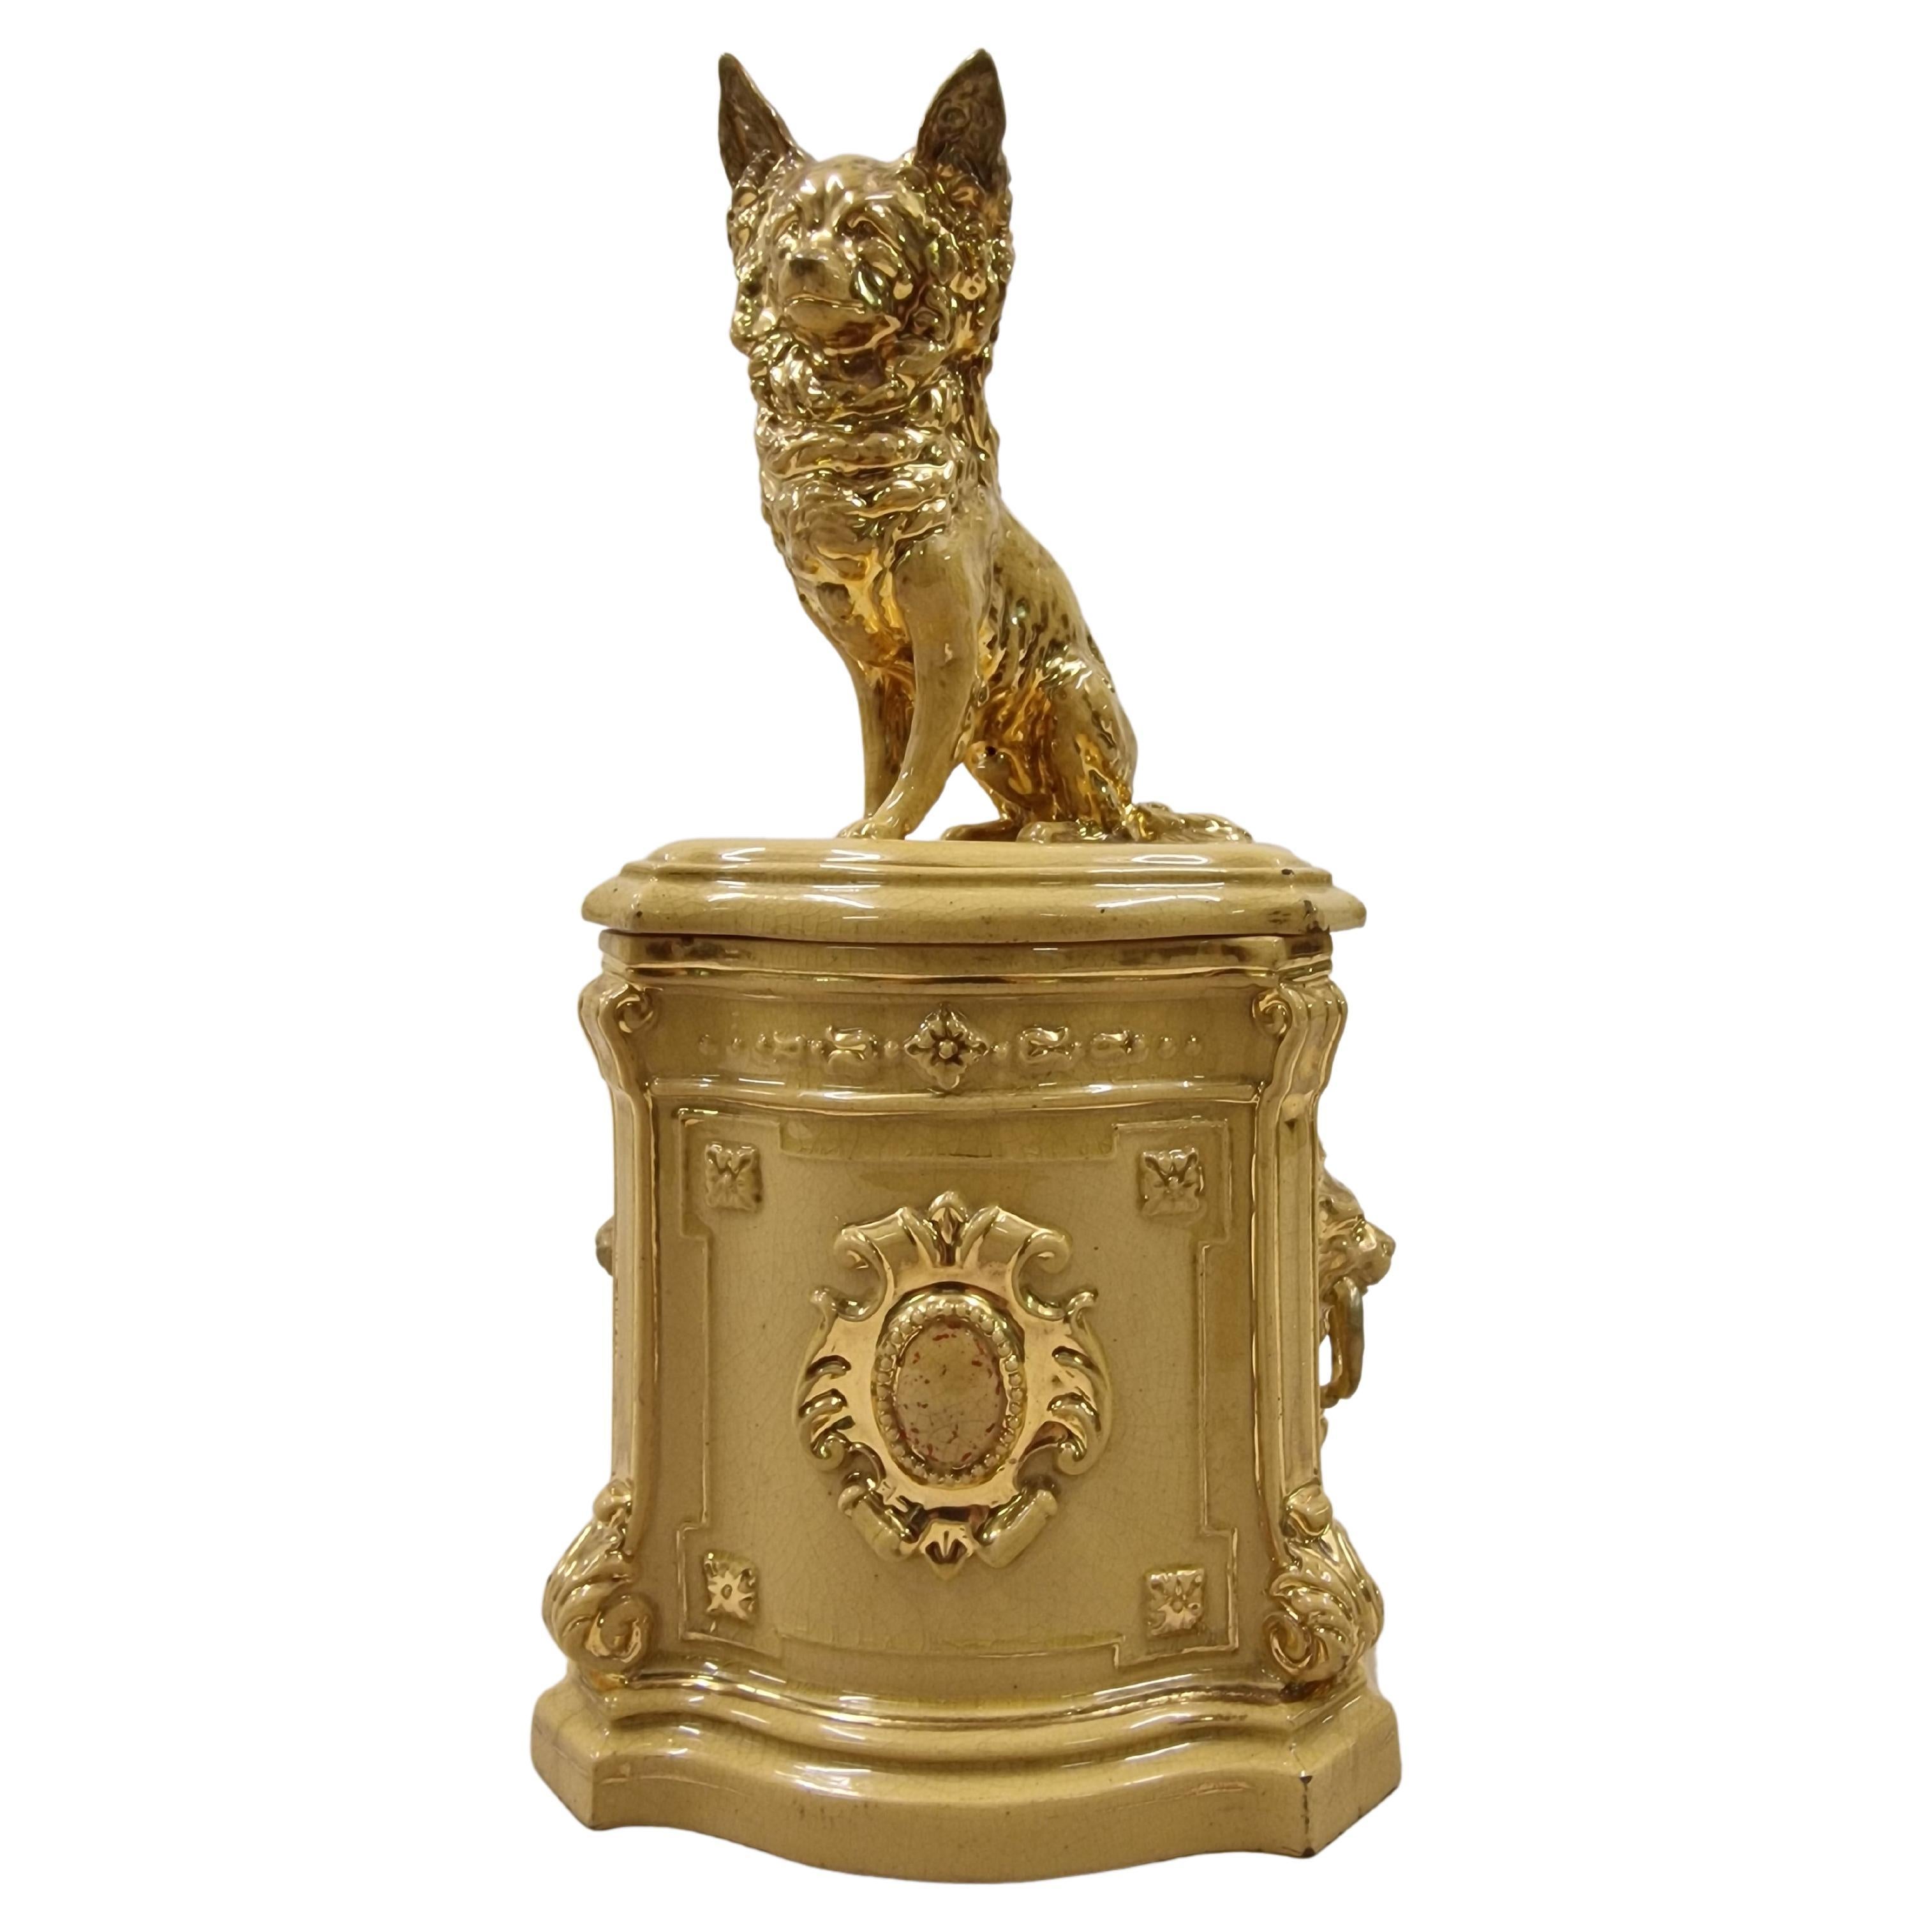 Charming snuff tobacco box, dog, animal, Bernhard Bloch, 1880s, Bohemia Austria